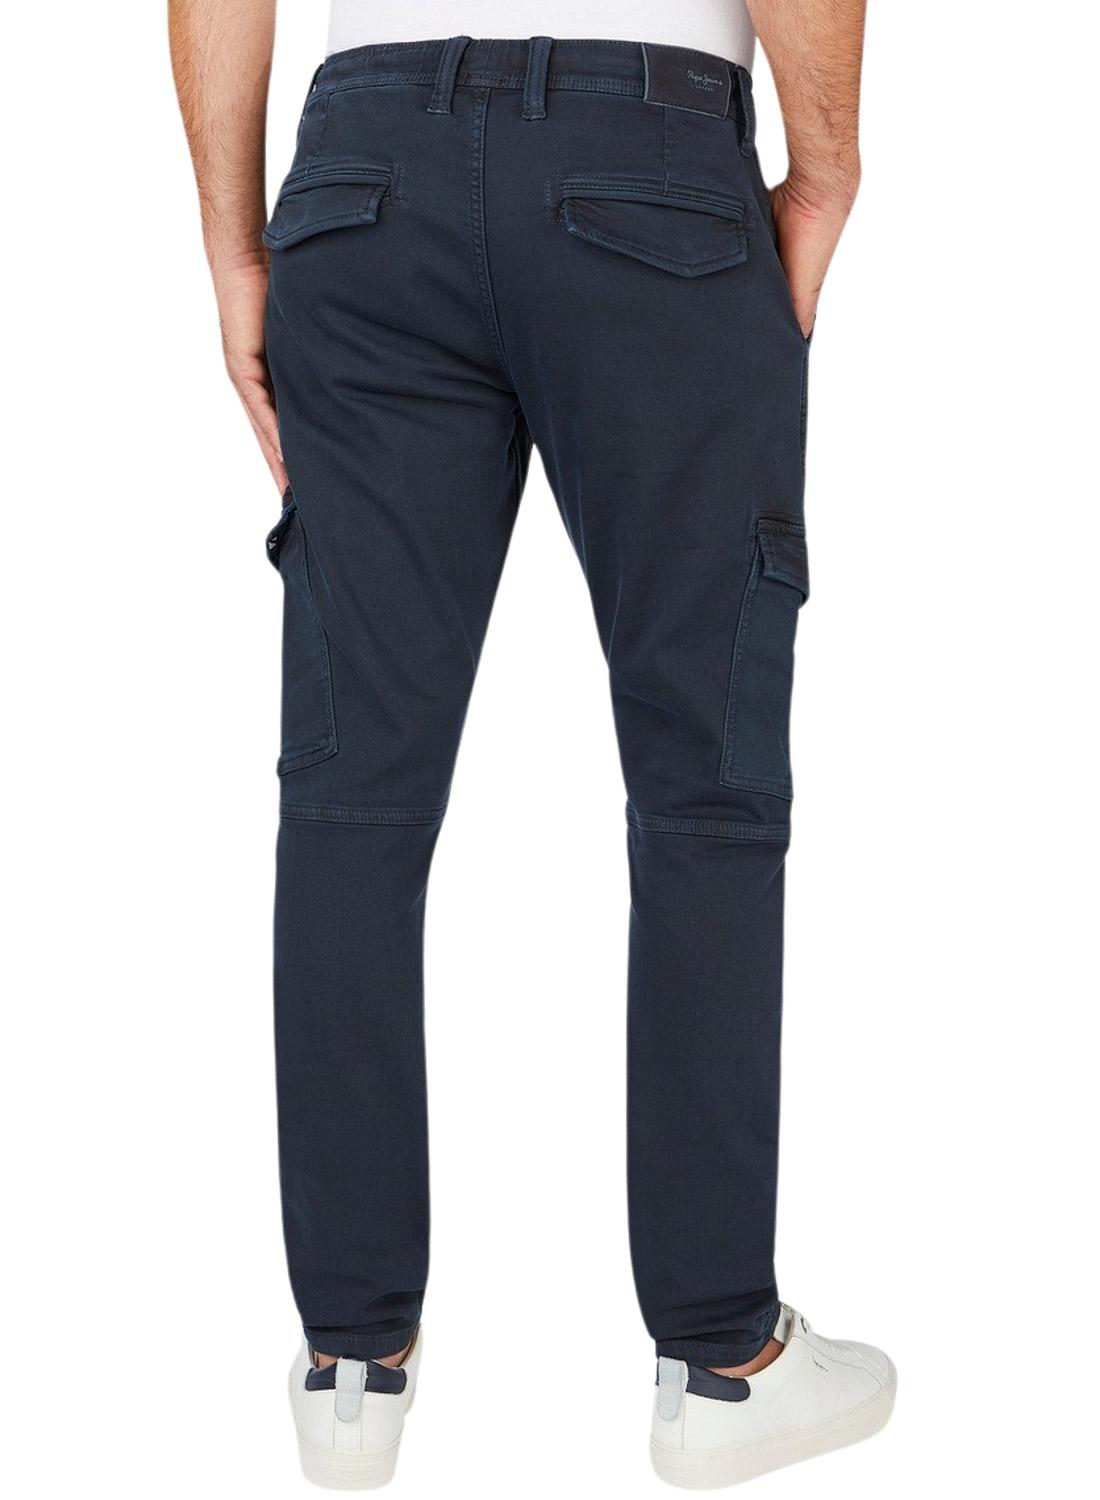 Pantaloni Pepe Jeans Jared Blu Navy per Uomo